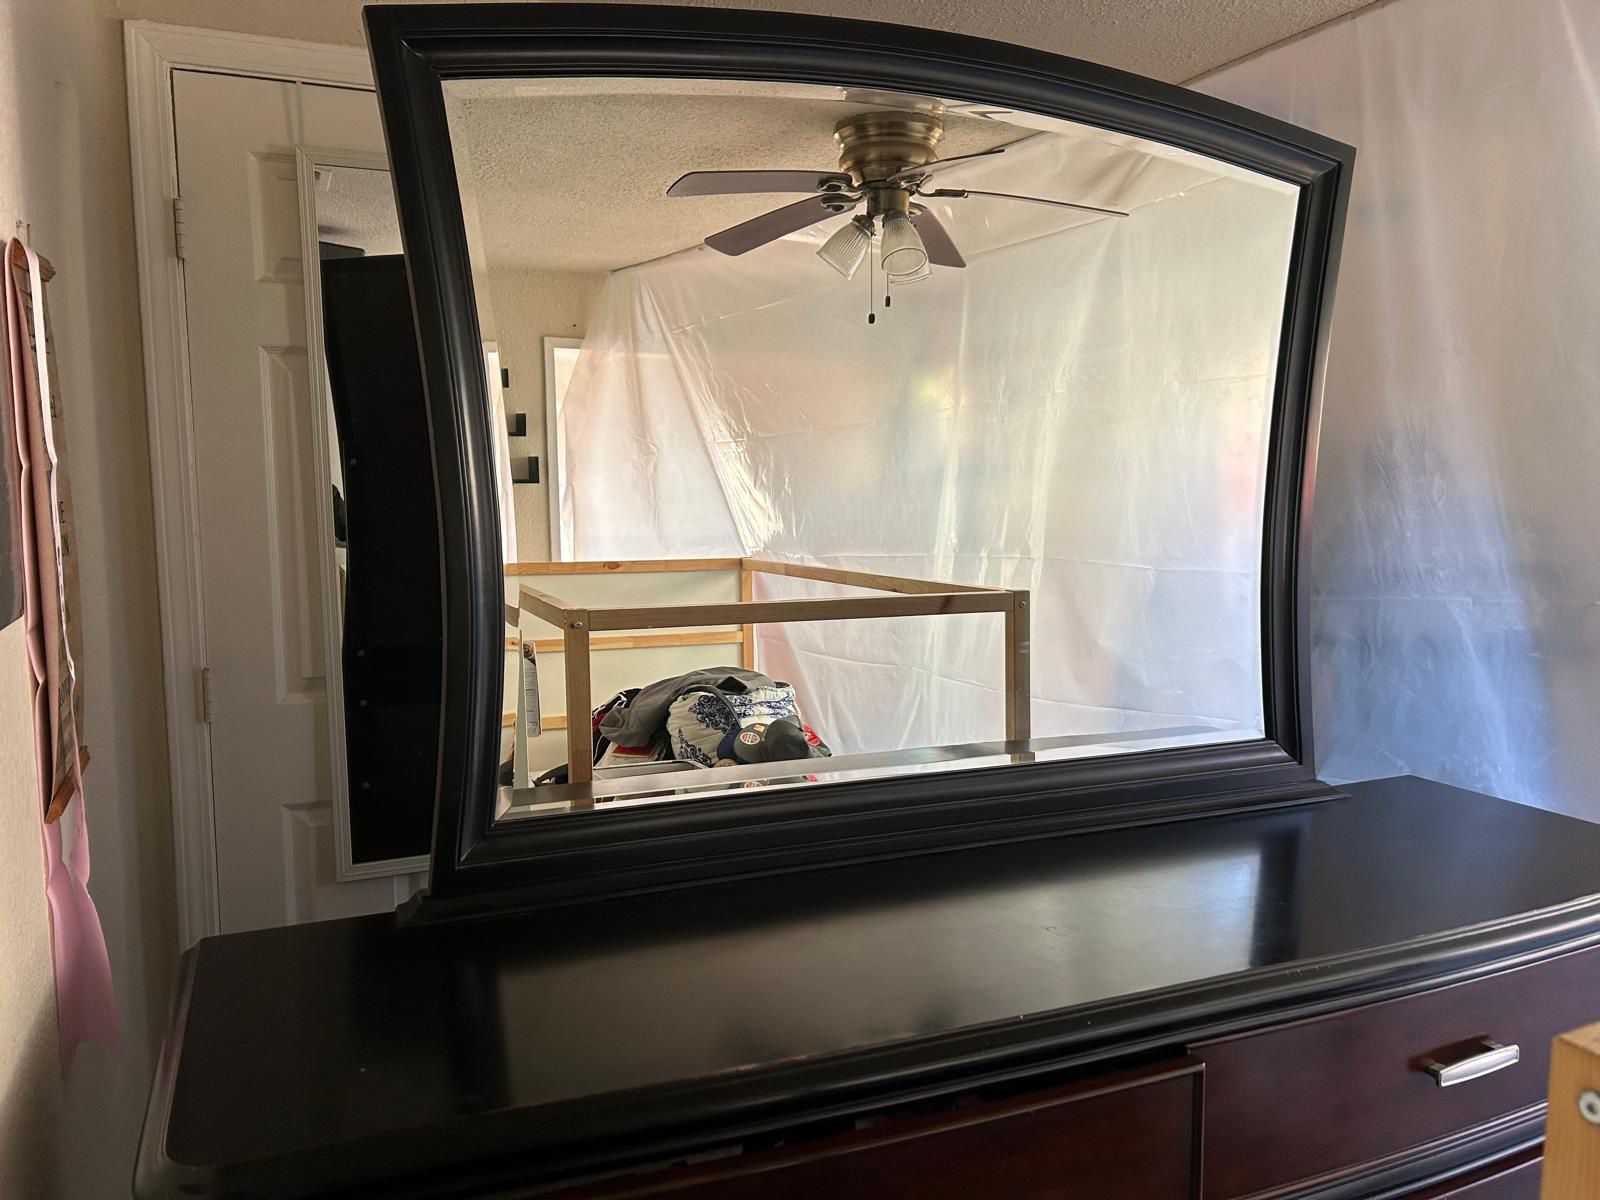 Wood Dresser With Mirror